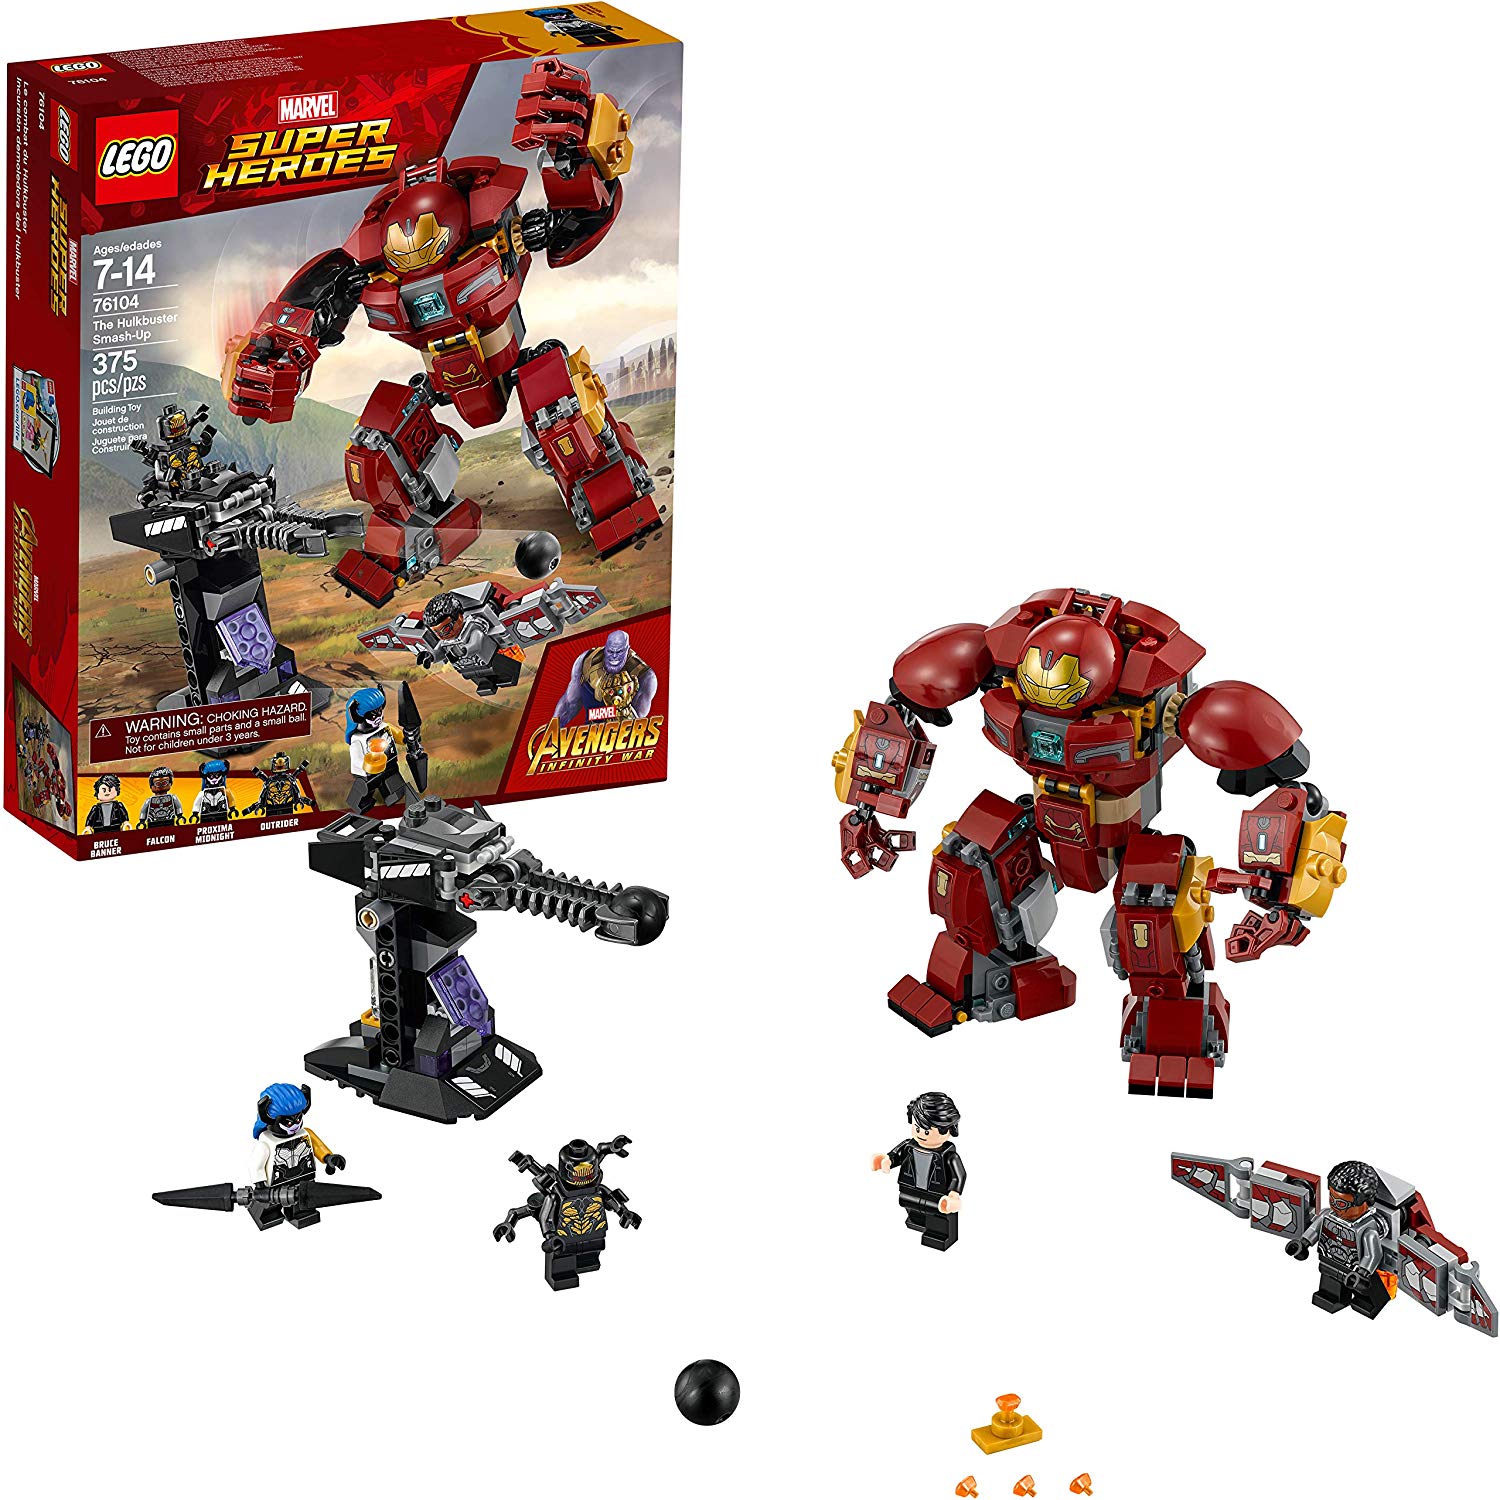 LEGO Marvel Super Heroes Avengers: Infinity War The Hulkbuster Smash-Up $16.79 (REG $29.99)